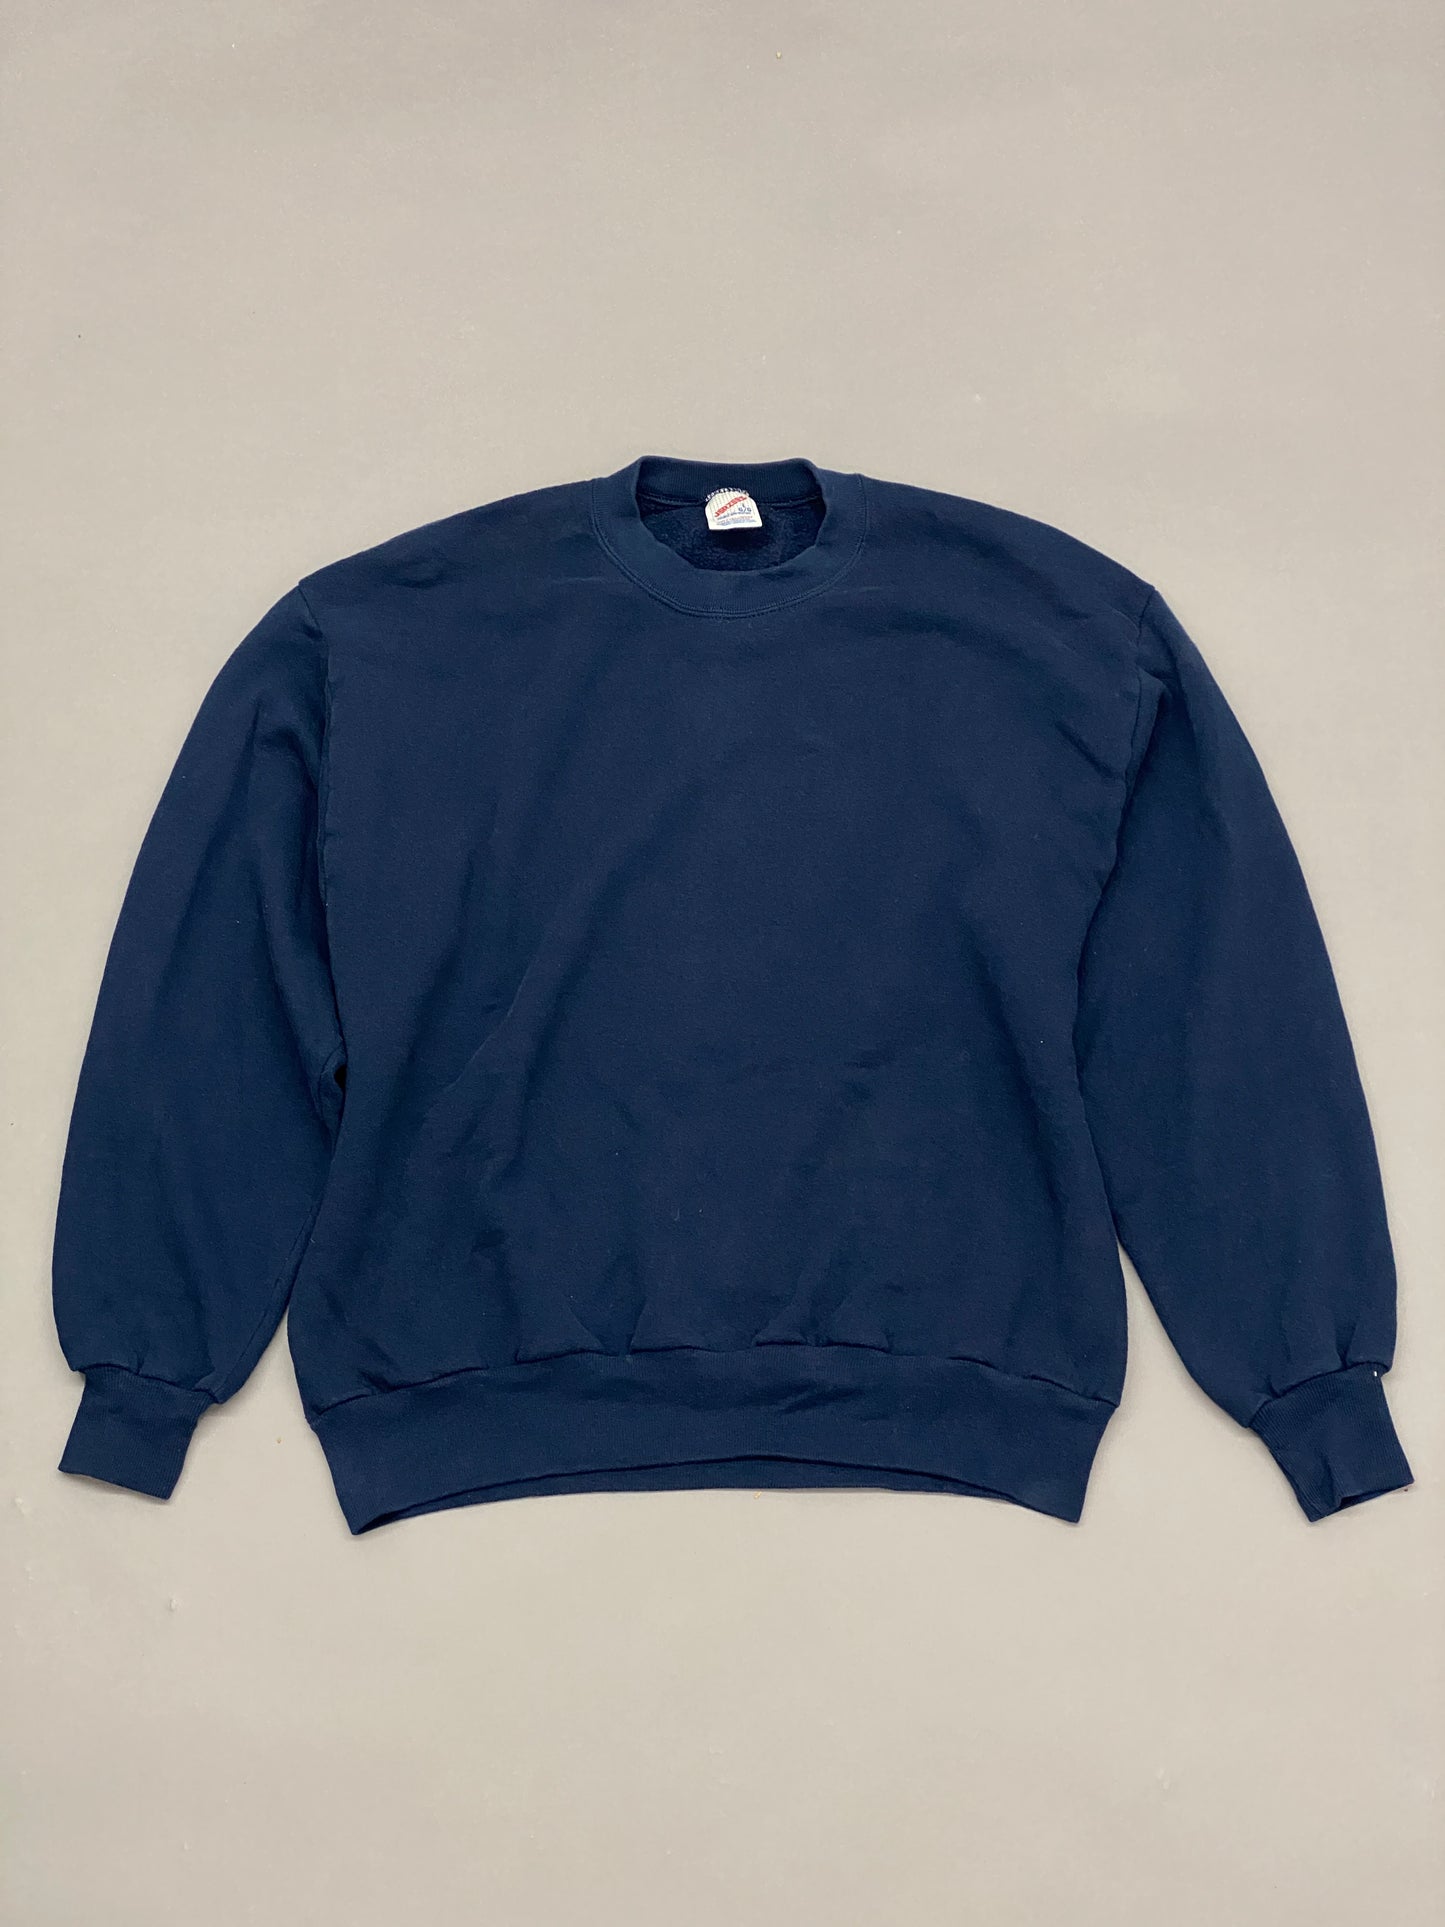 Jerzees Navy Vintage Sweatshirt